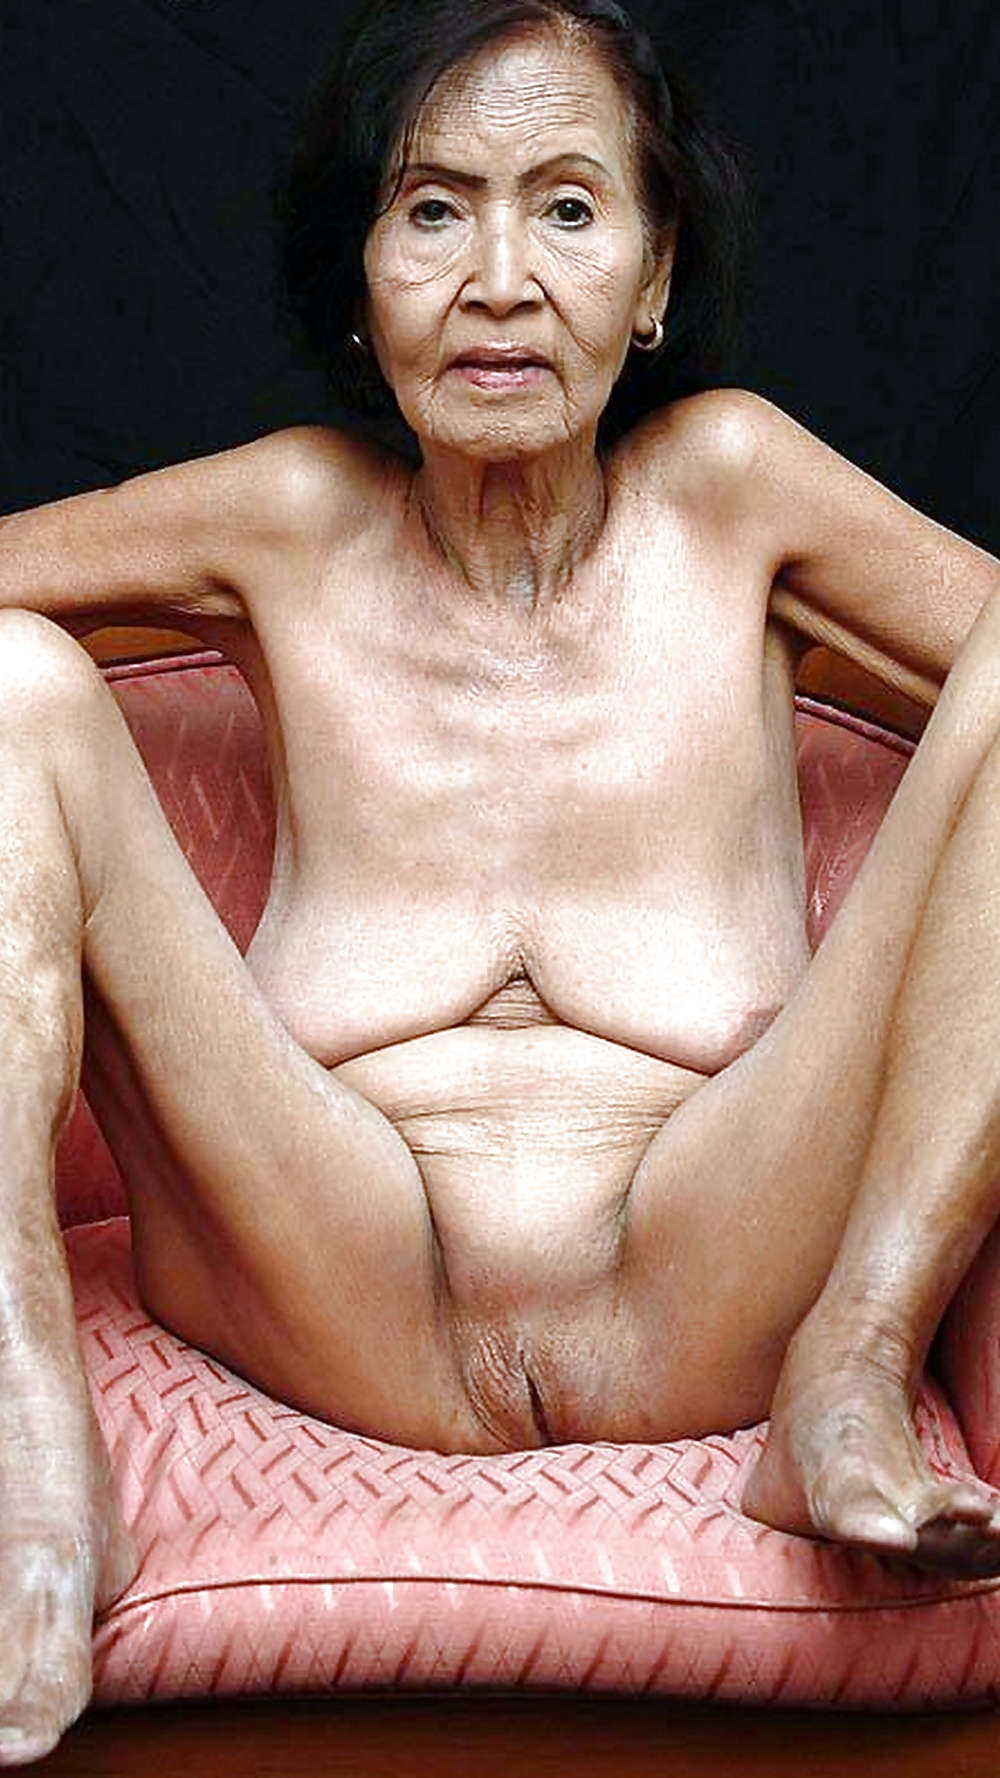 Ugly Granny Desnudo Surprise Porn Pictures Flash